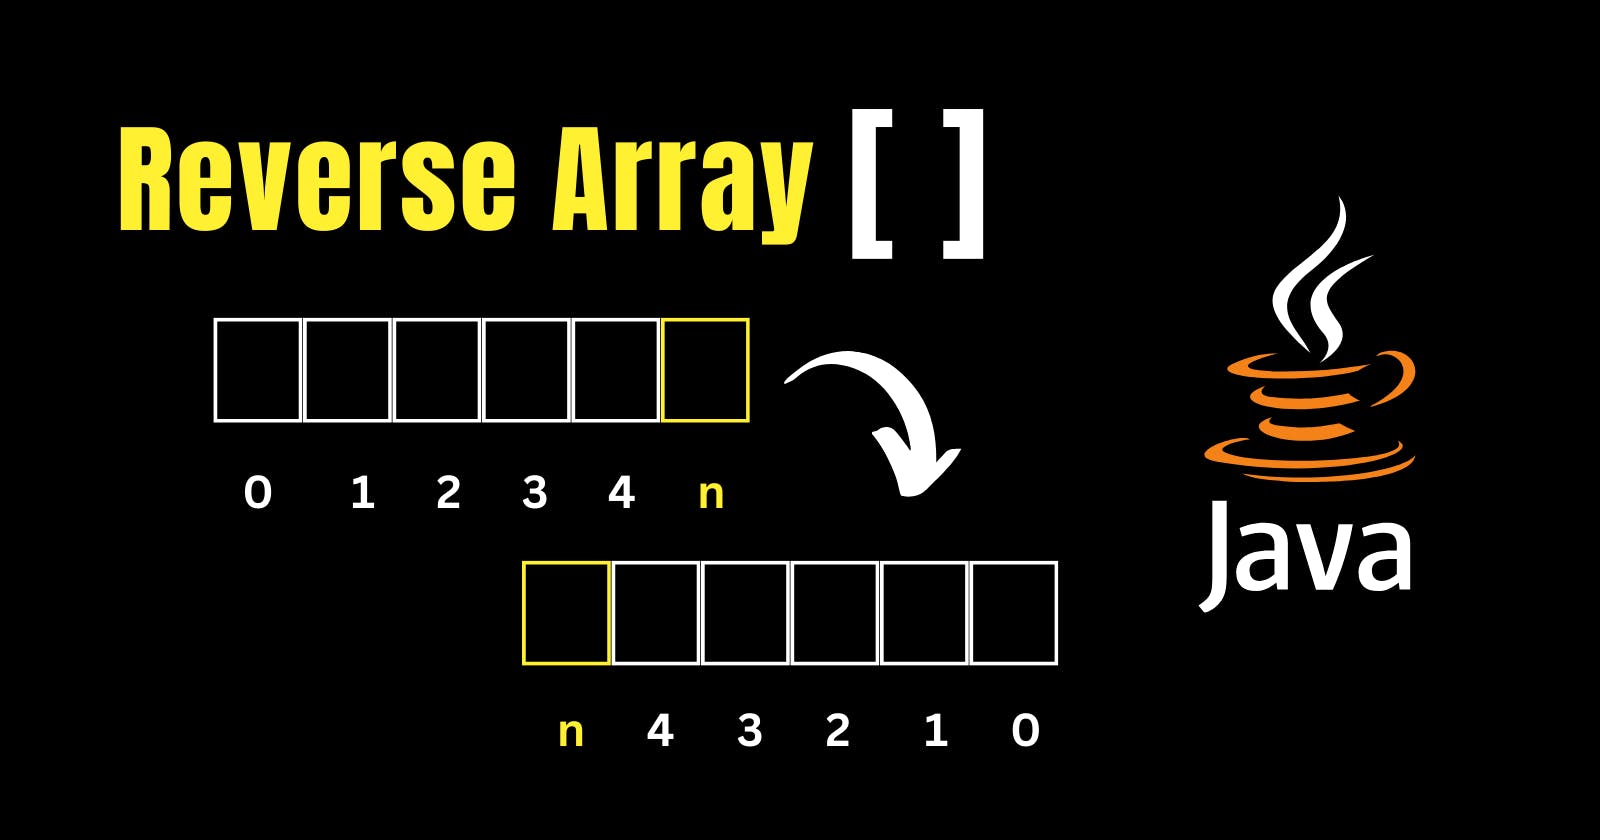 Reverse Array - Java Program